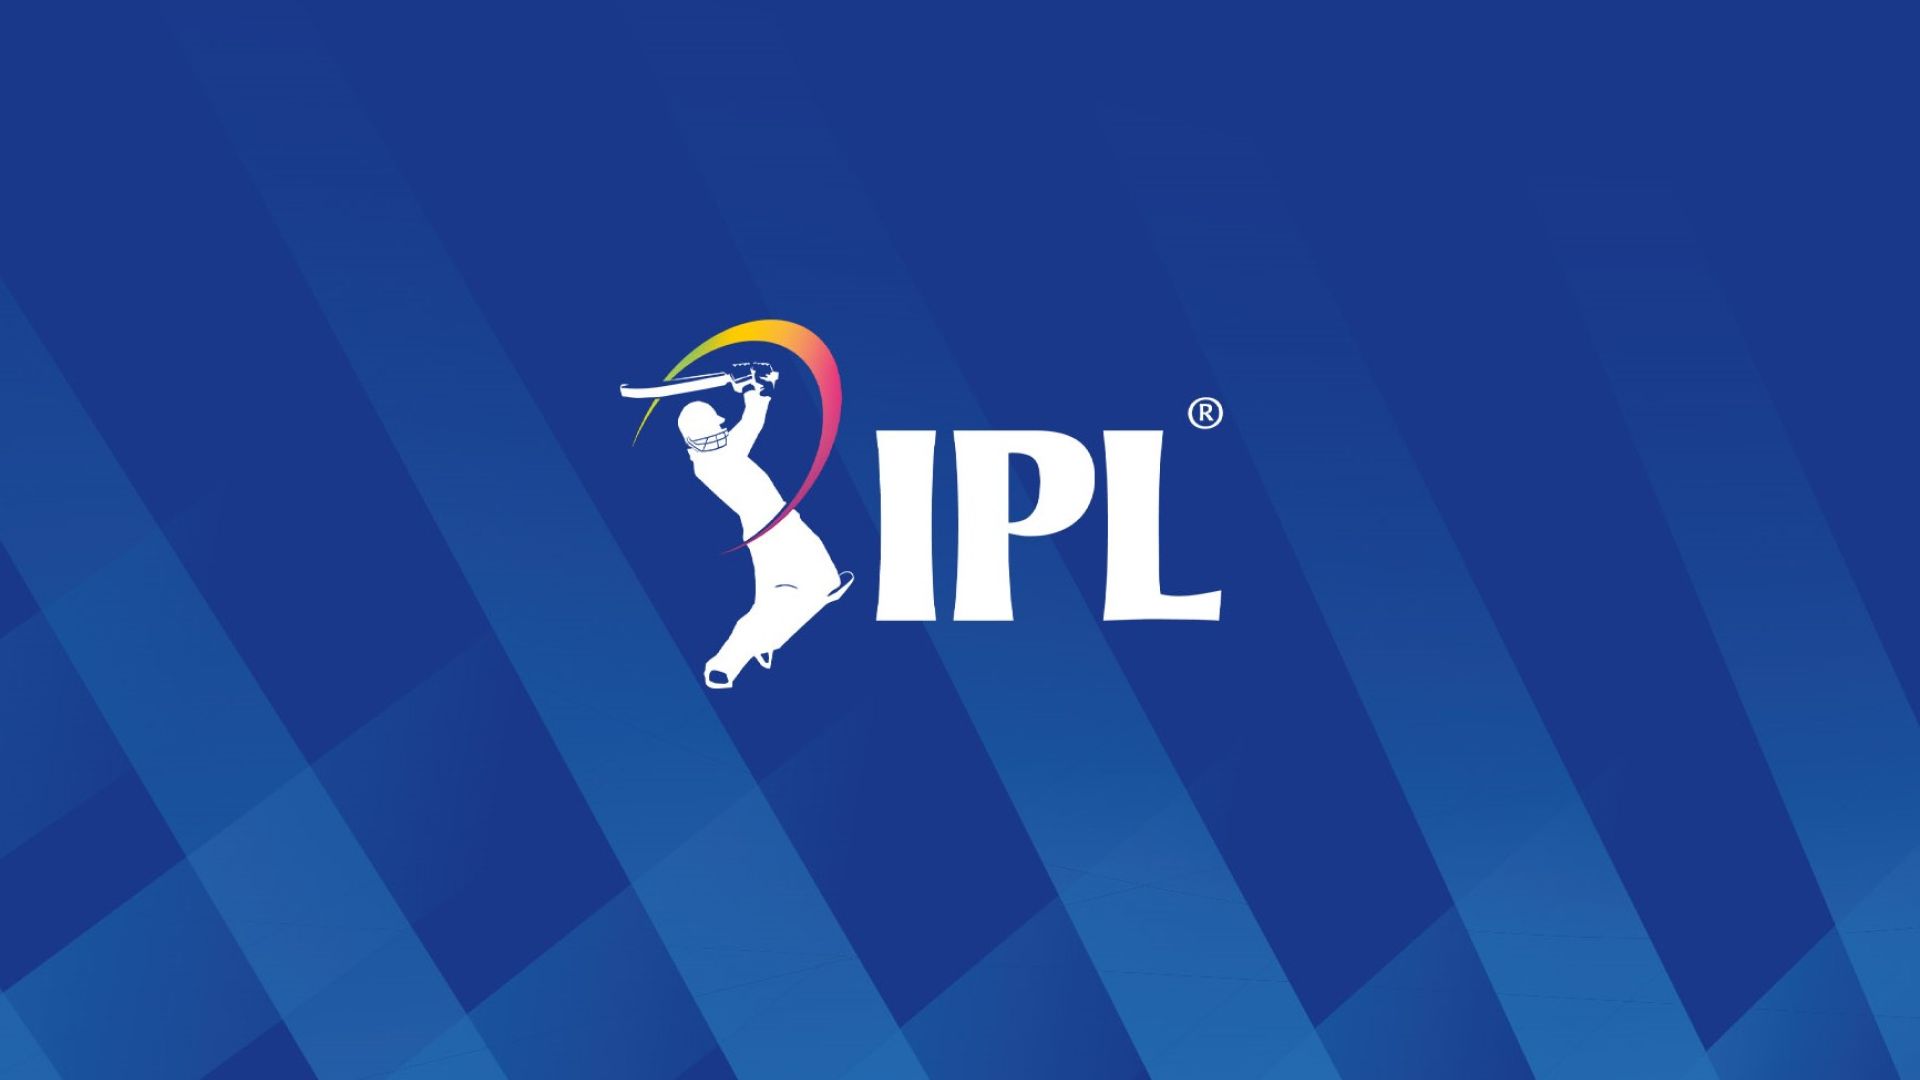 IPL 2022 to be held in Mumbai behind closed doors: Reports